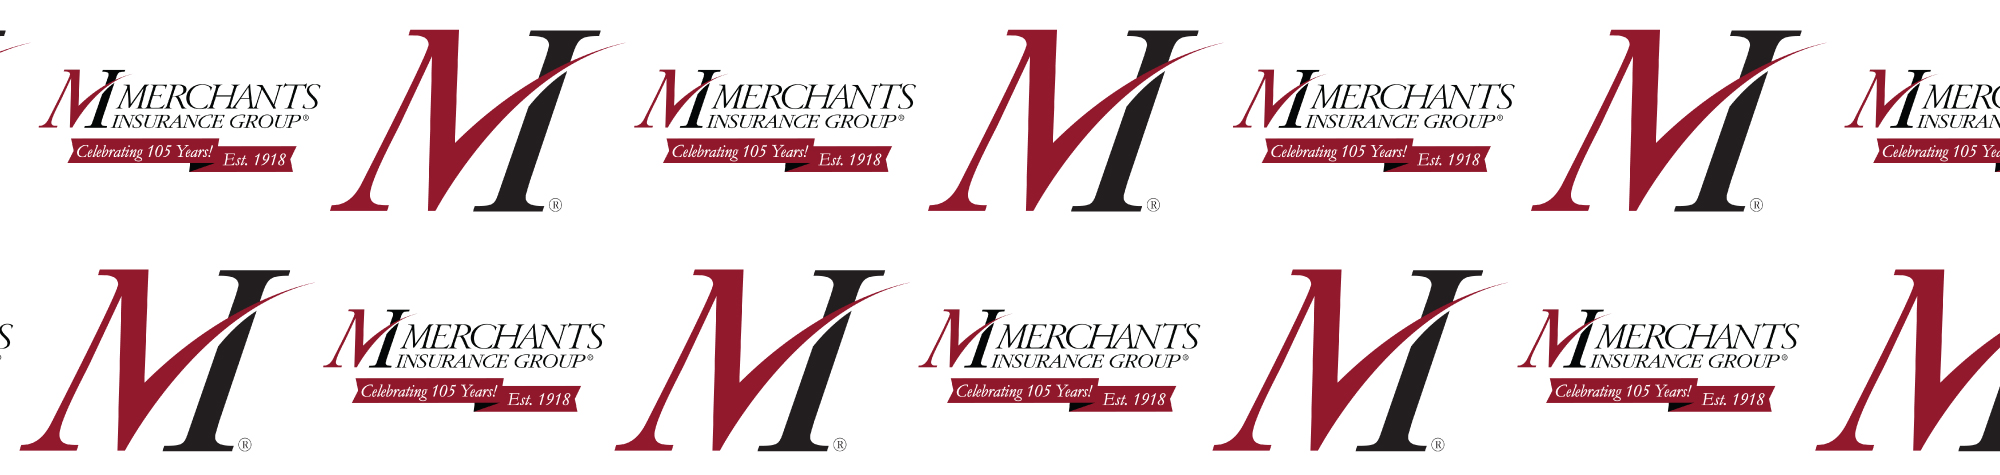 Merchants Insurance Group Celebrates 105th Anniversary!